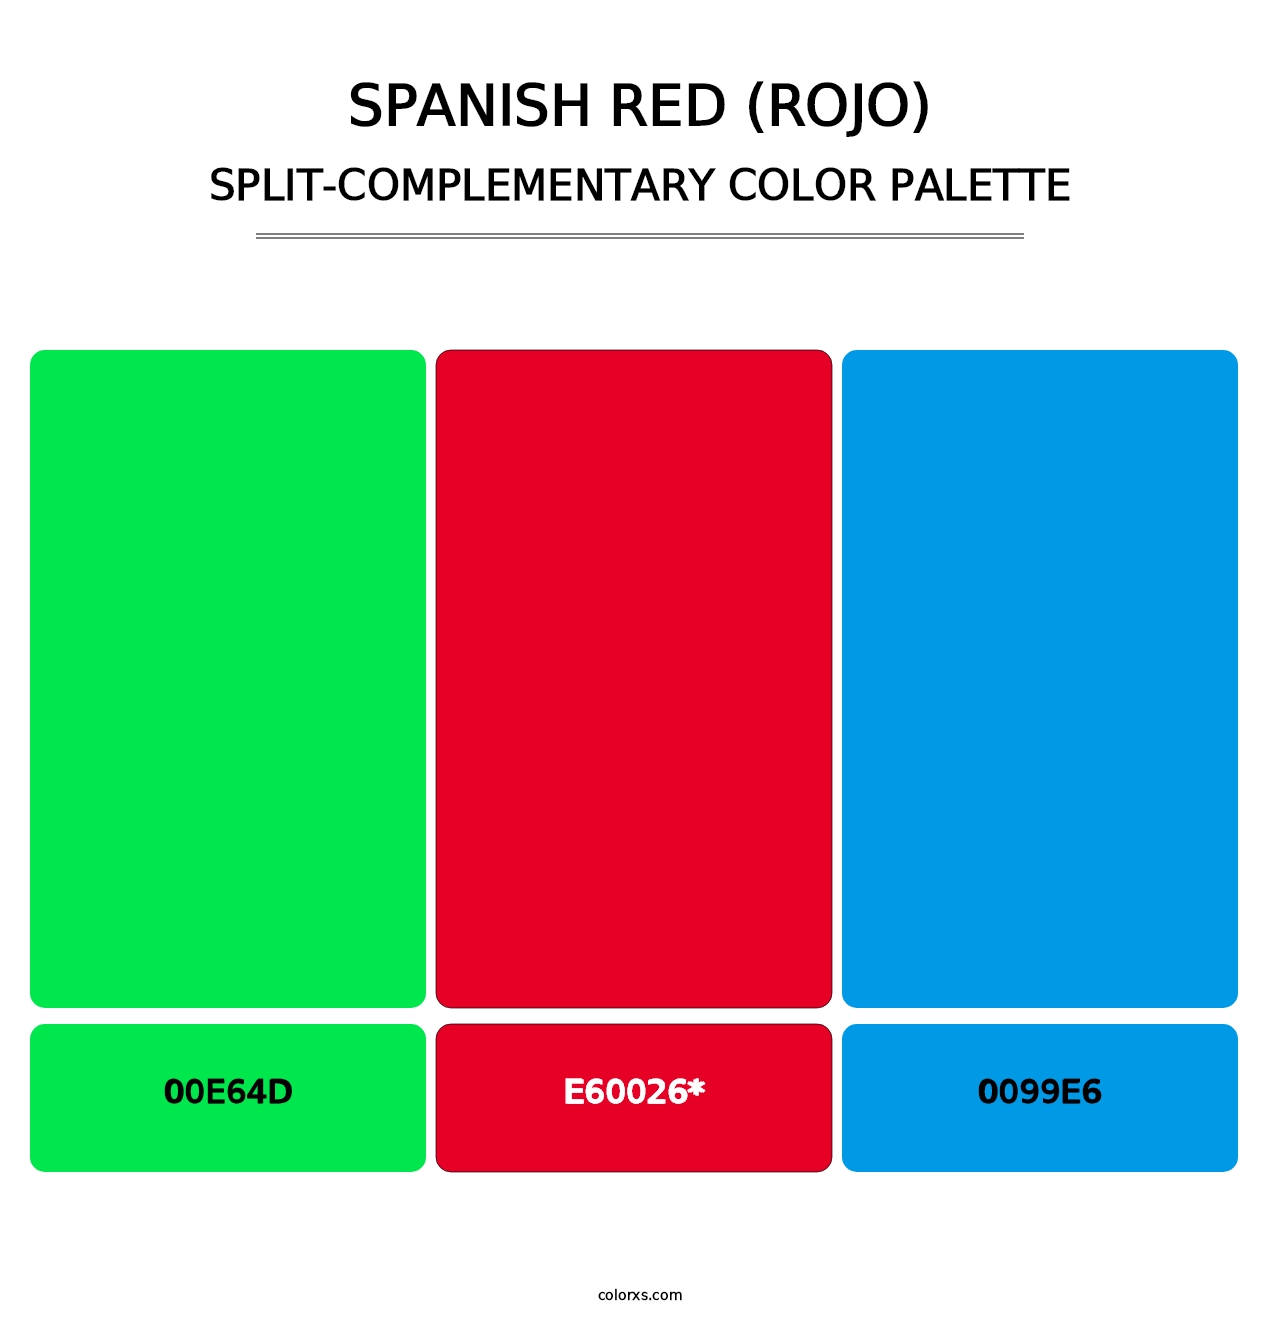 Spanish Red (Rojo) - Split-Complementary Color Palette